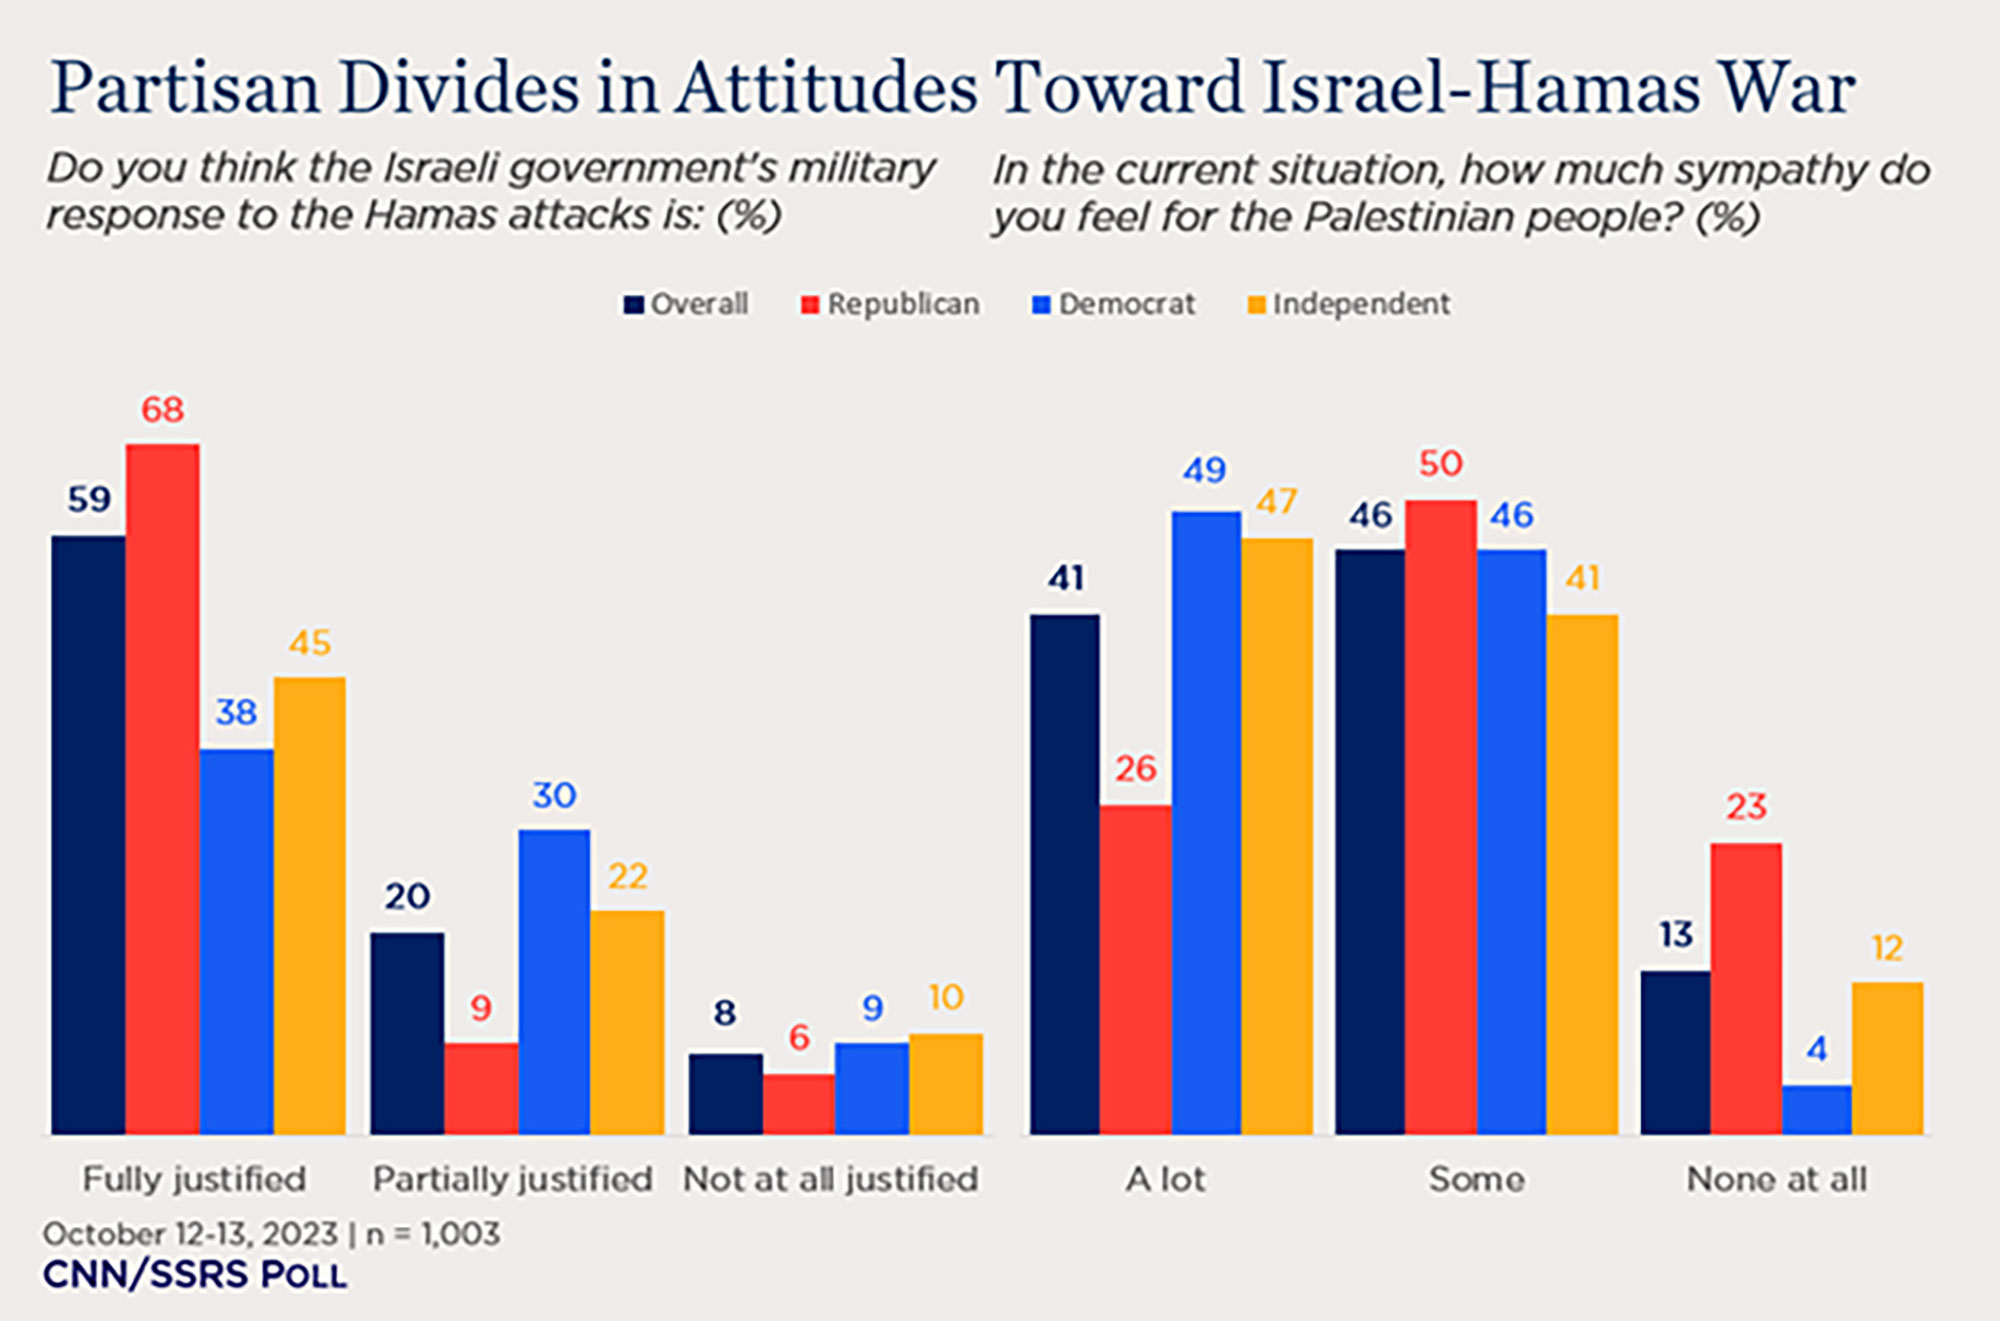 "figure showing partisan divides in attitudes toward Israel-Hamas war"